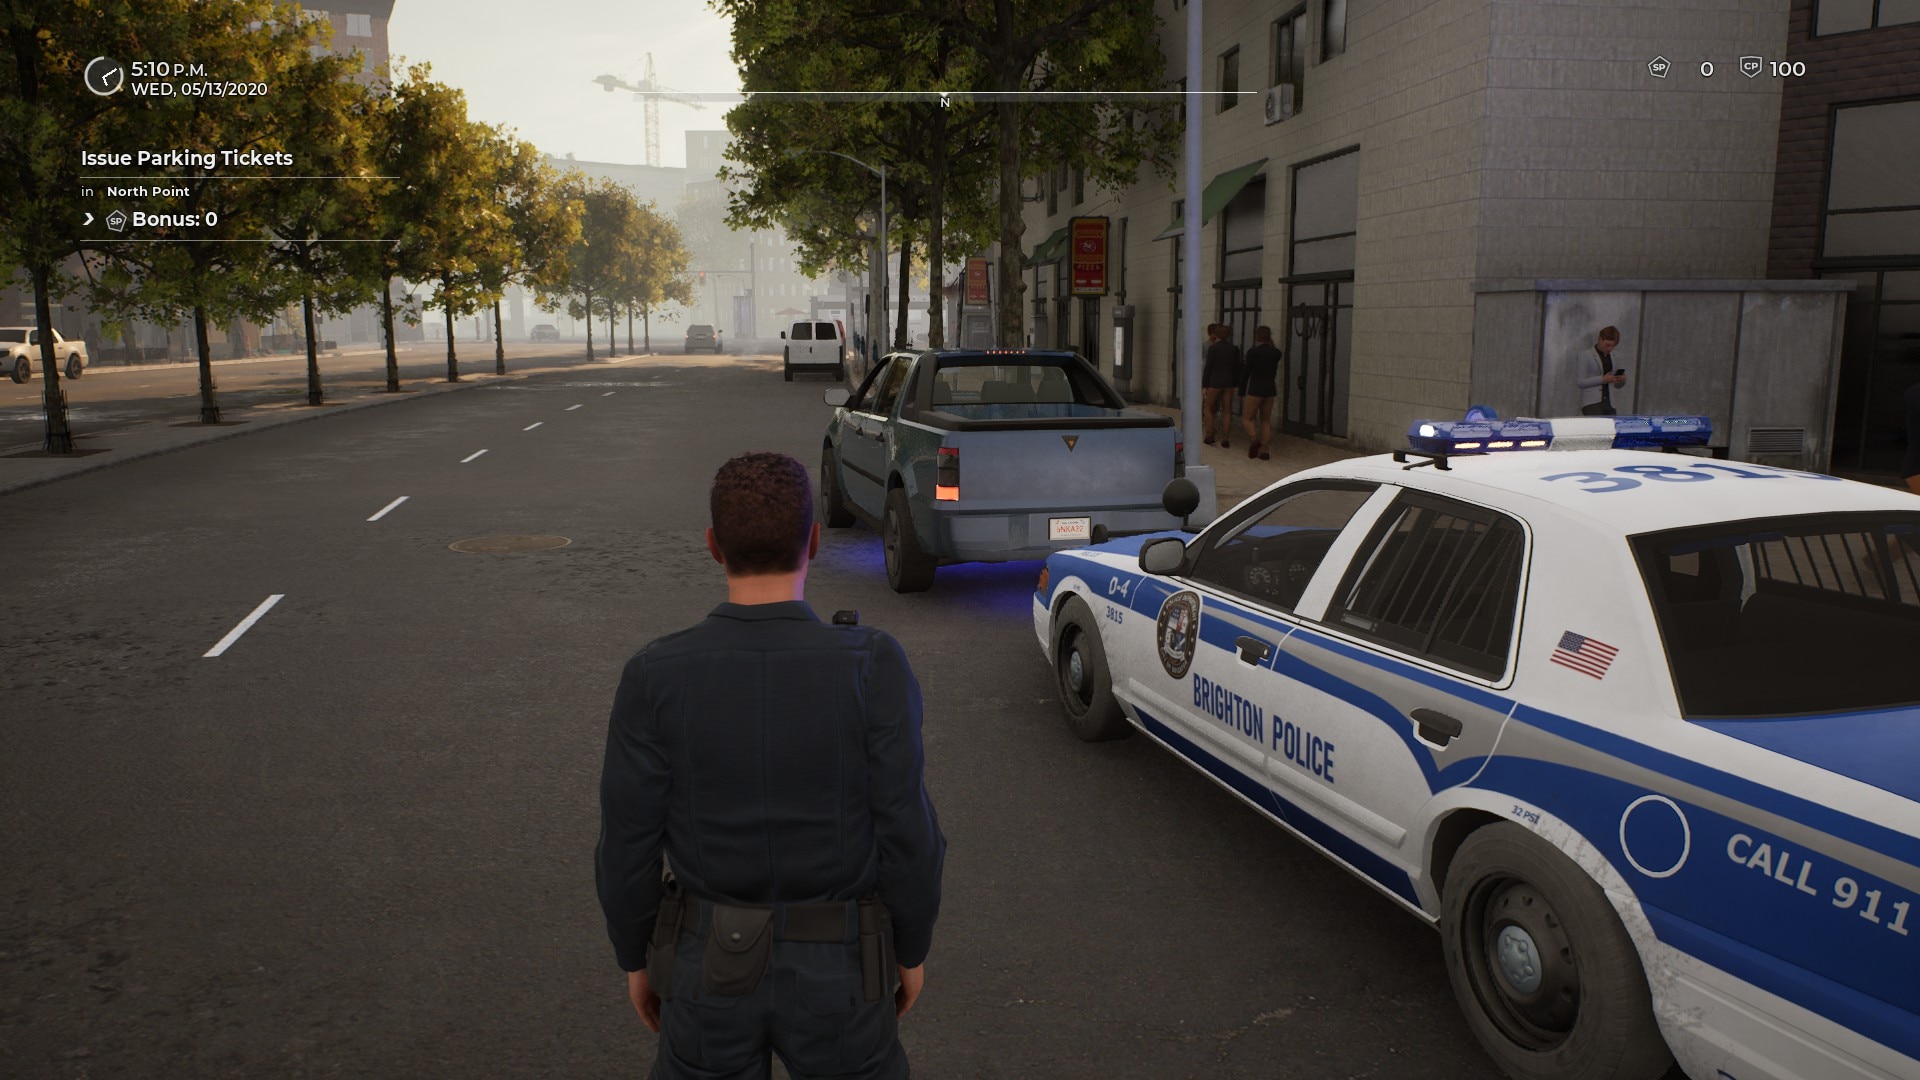 Police Car Simulator for ios download